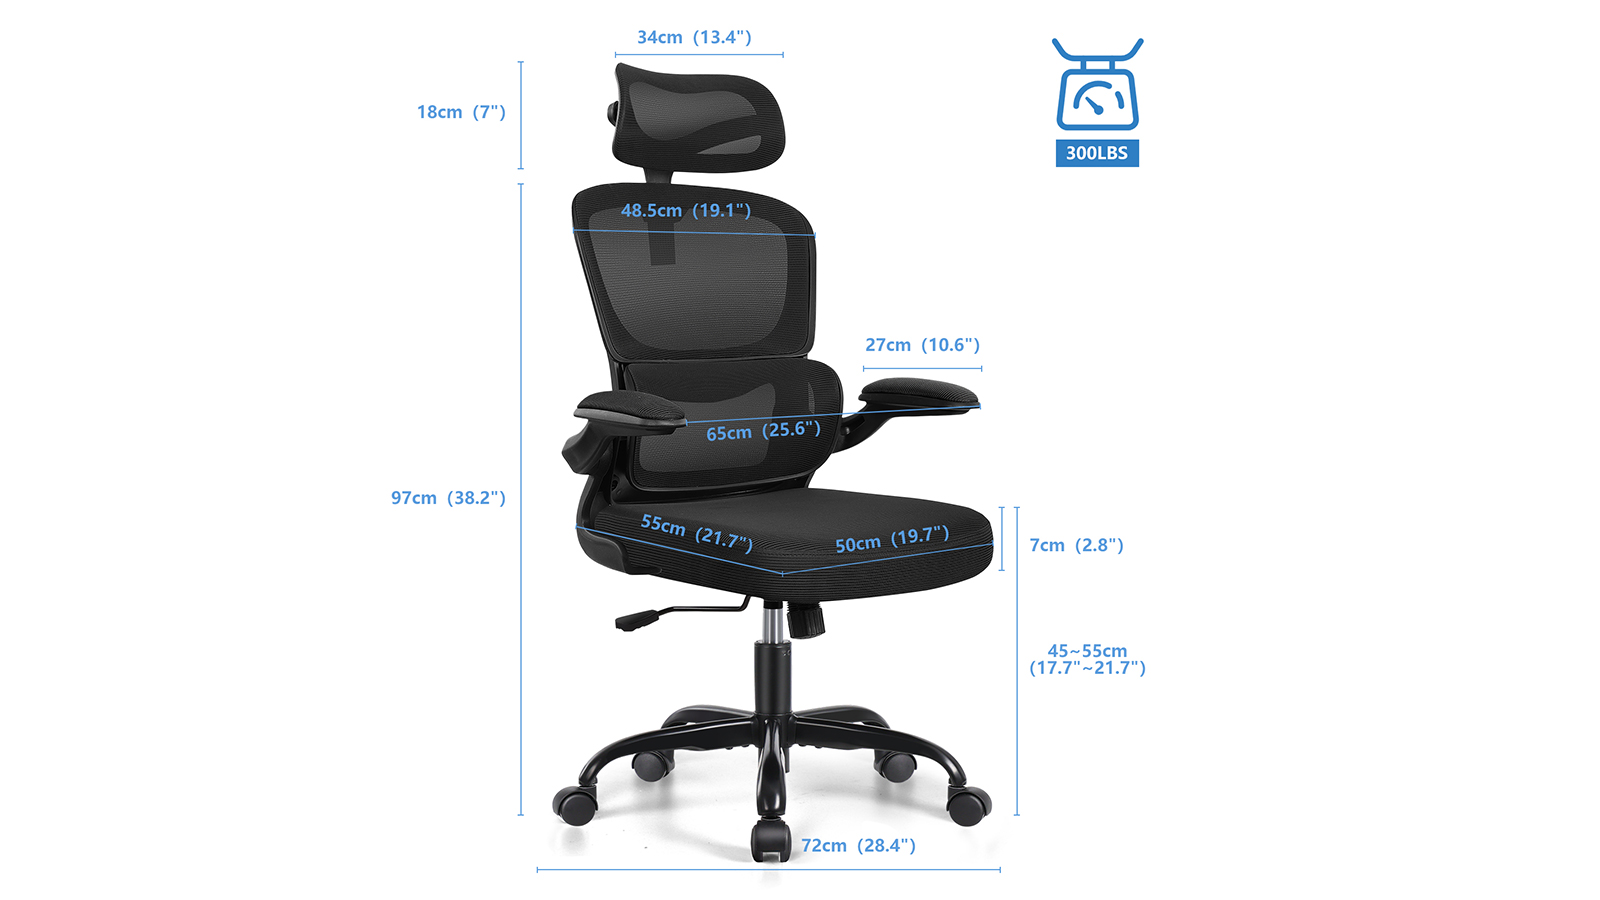 BTOD Akir Chair - Mesh Back and Fabric Seat